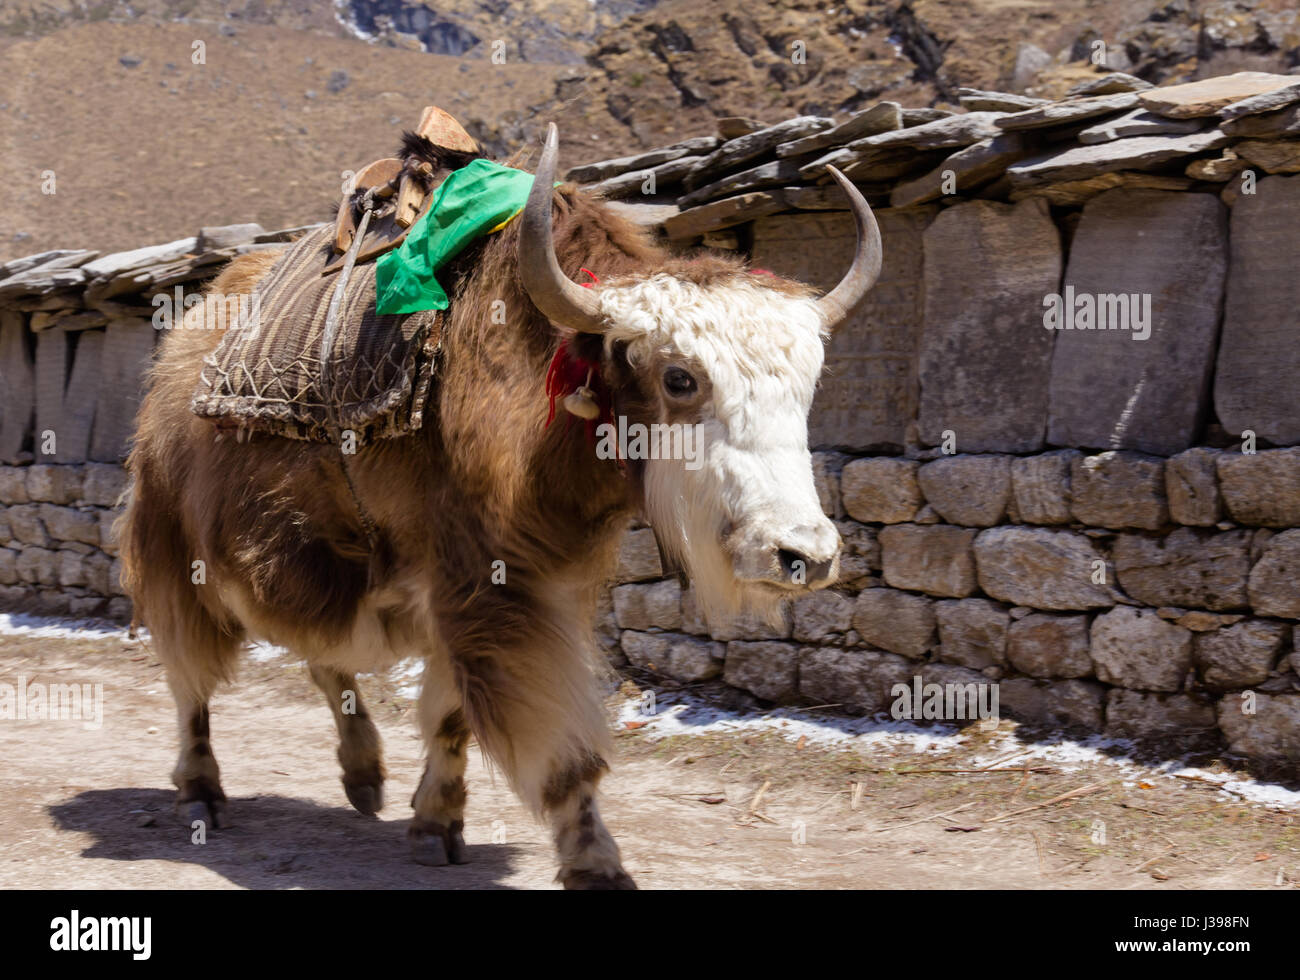 Brown and white yak looks directly at camera while walking through Khumjung village, Khumbu region of Nepal Stock Photo